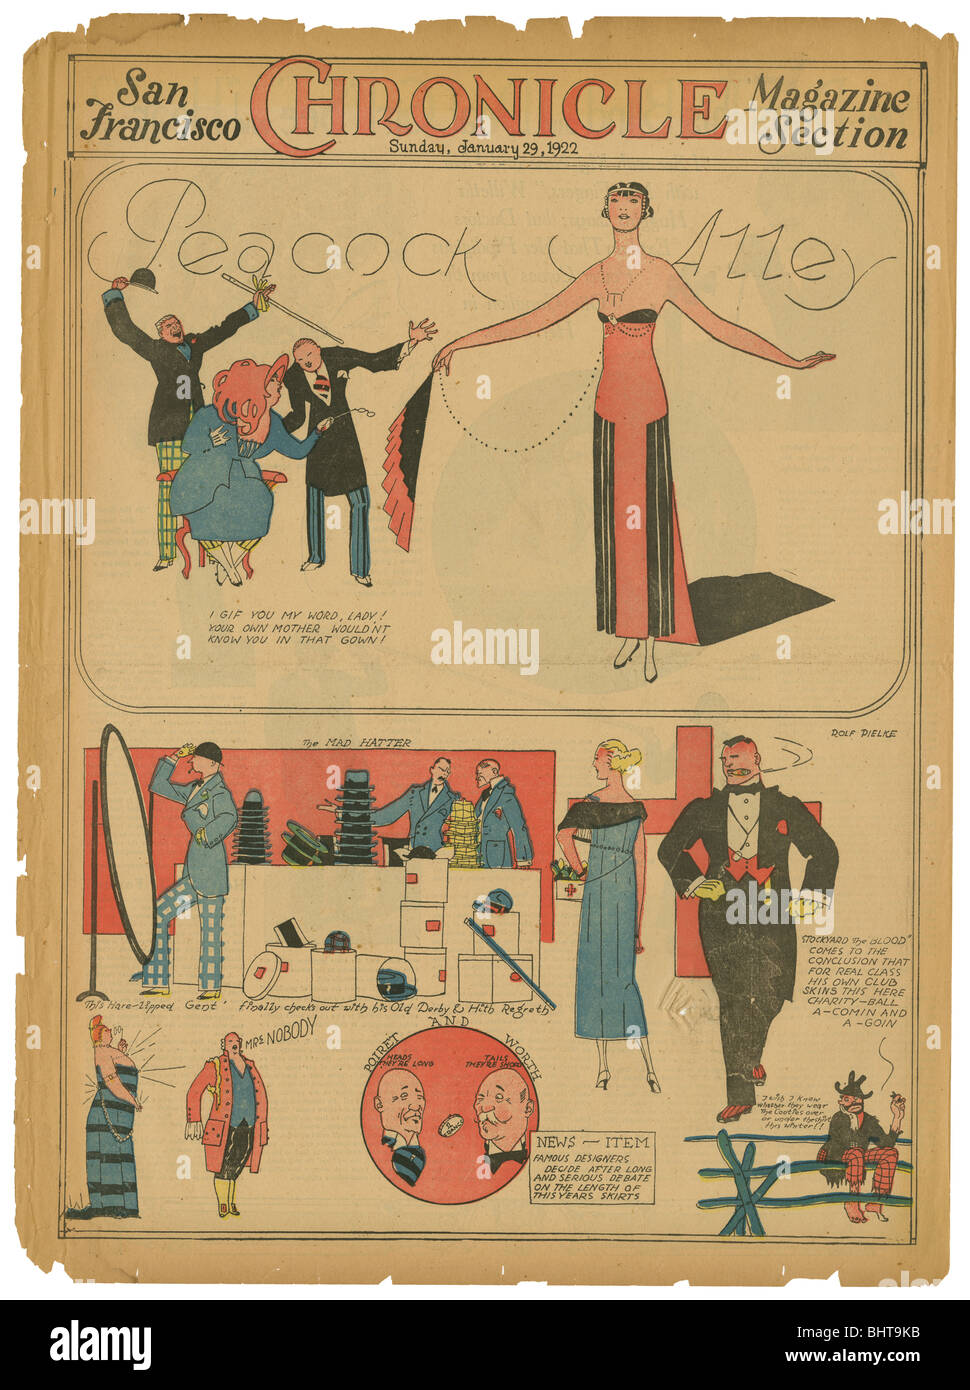 Sunday January 29, 1922 San Francisco Chronicle Magazine Section. Peacock Alley, flapper artwork, Art Deco by Rolf Pielke. Stock Photo